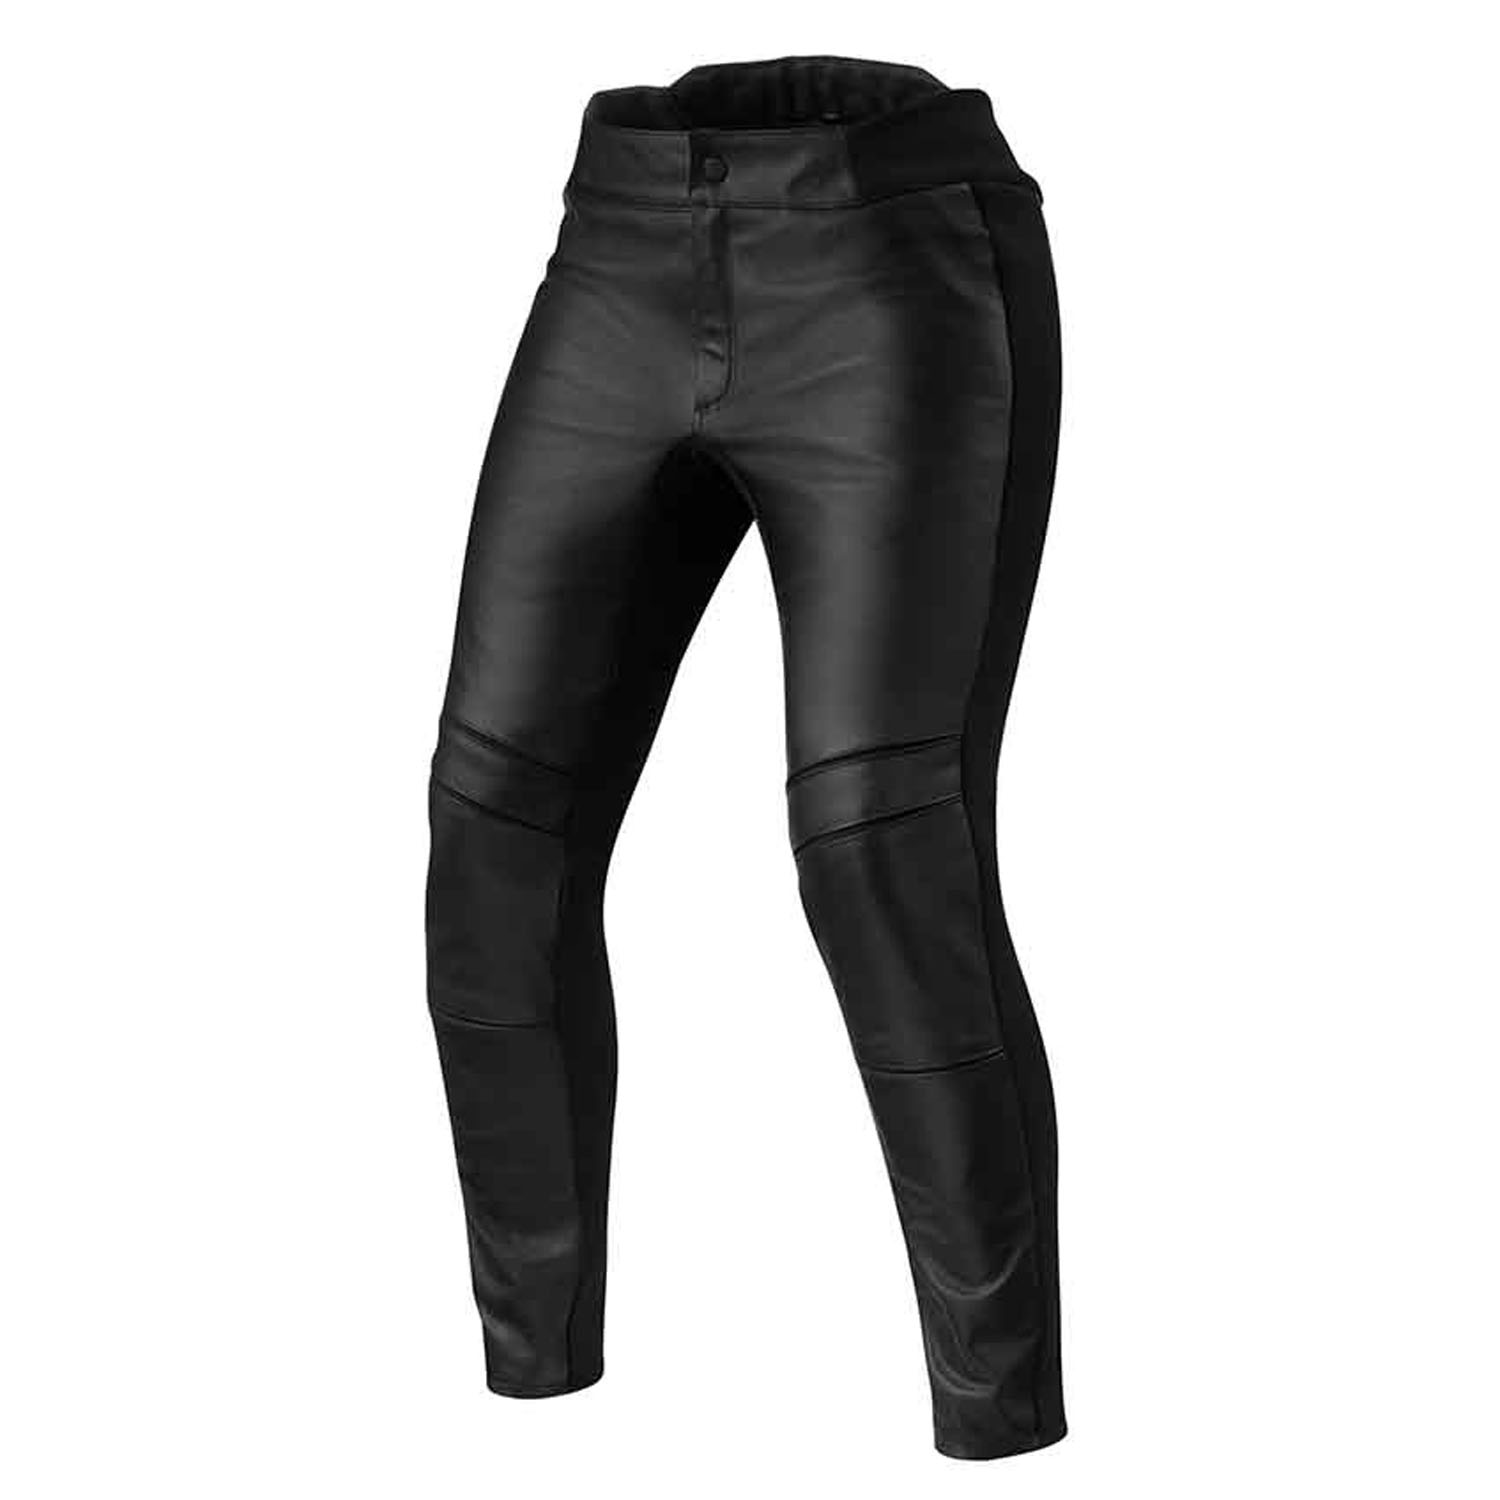 Image of REV'IT! Maci Ladies Black Short Motorcycle Pants Size 38 ID 8700001359139